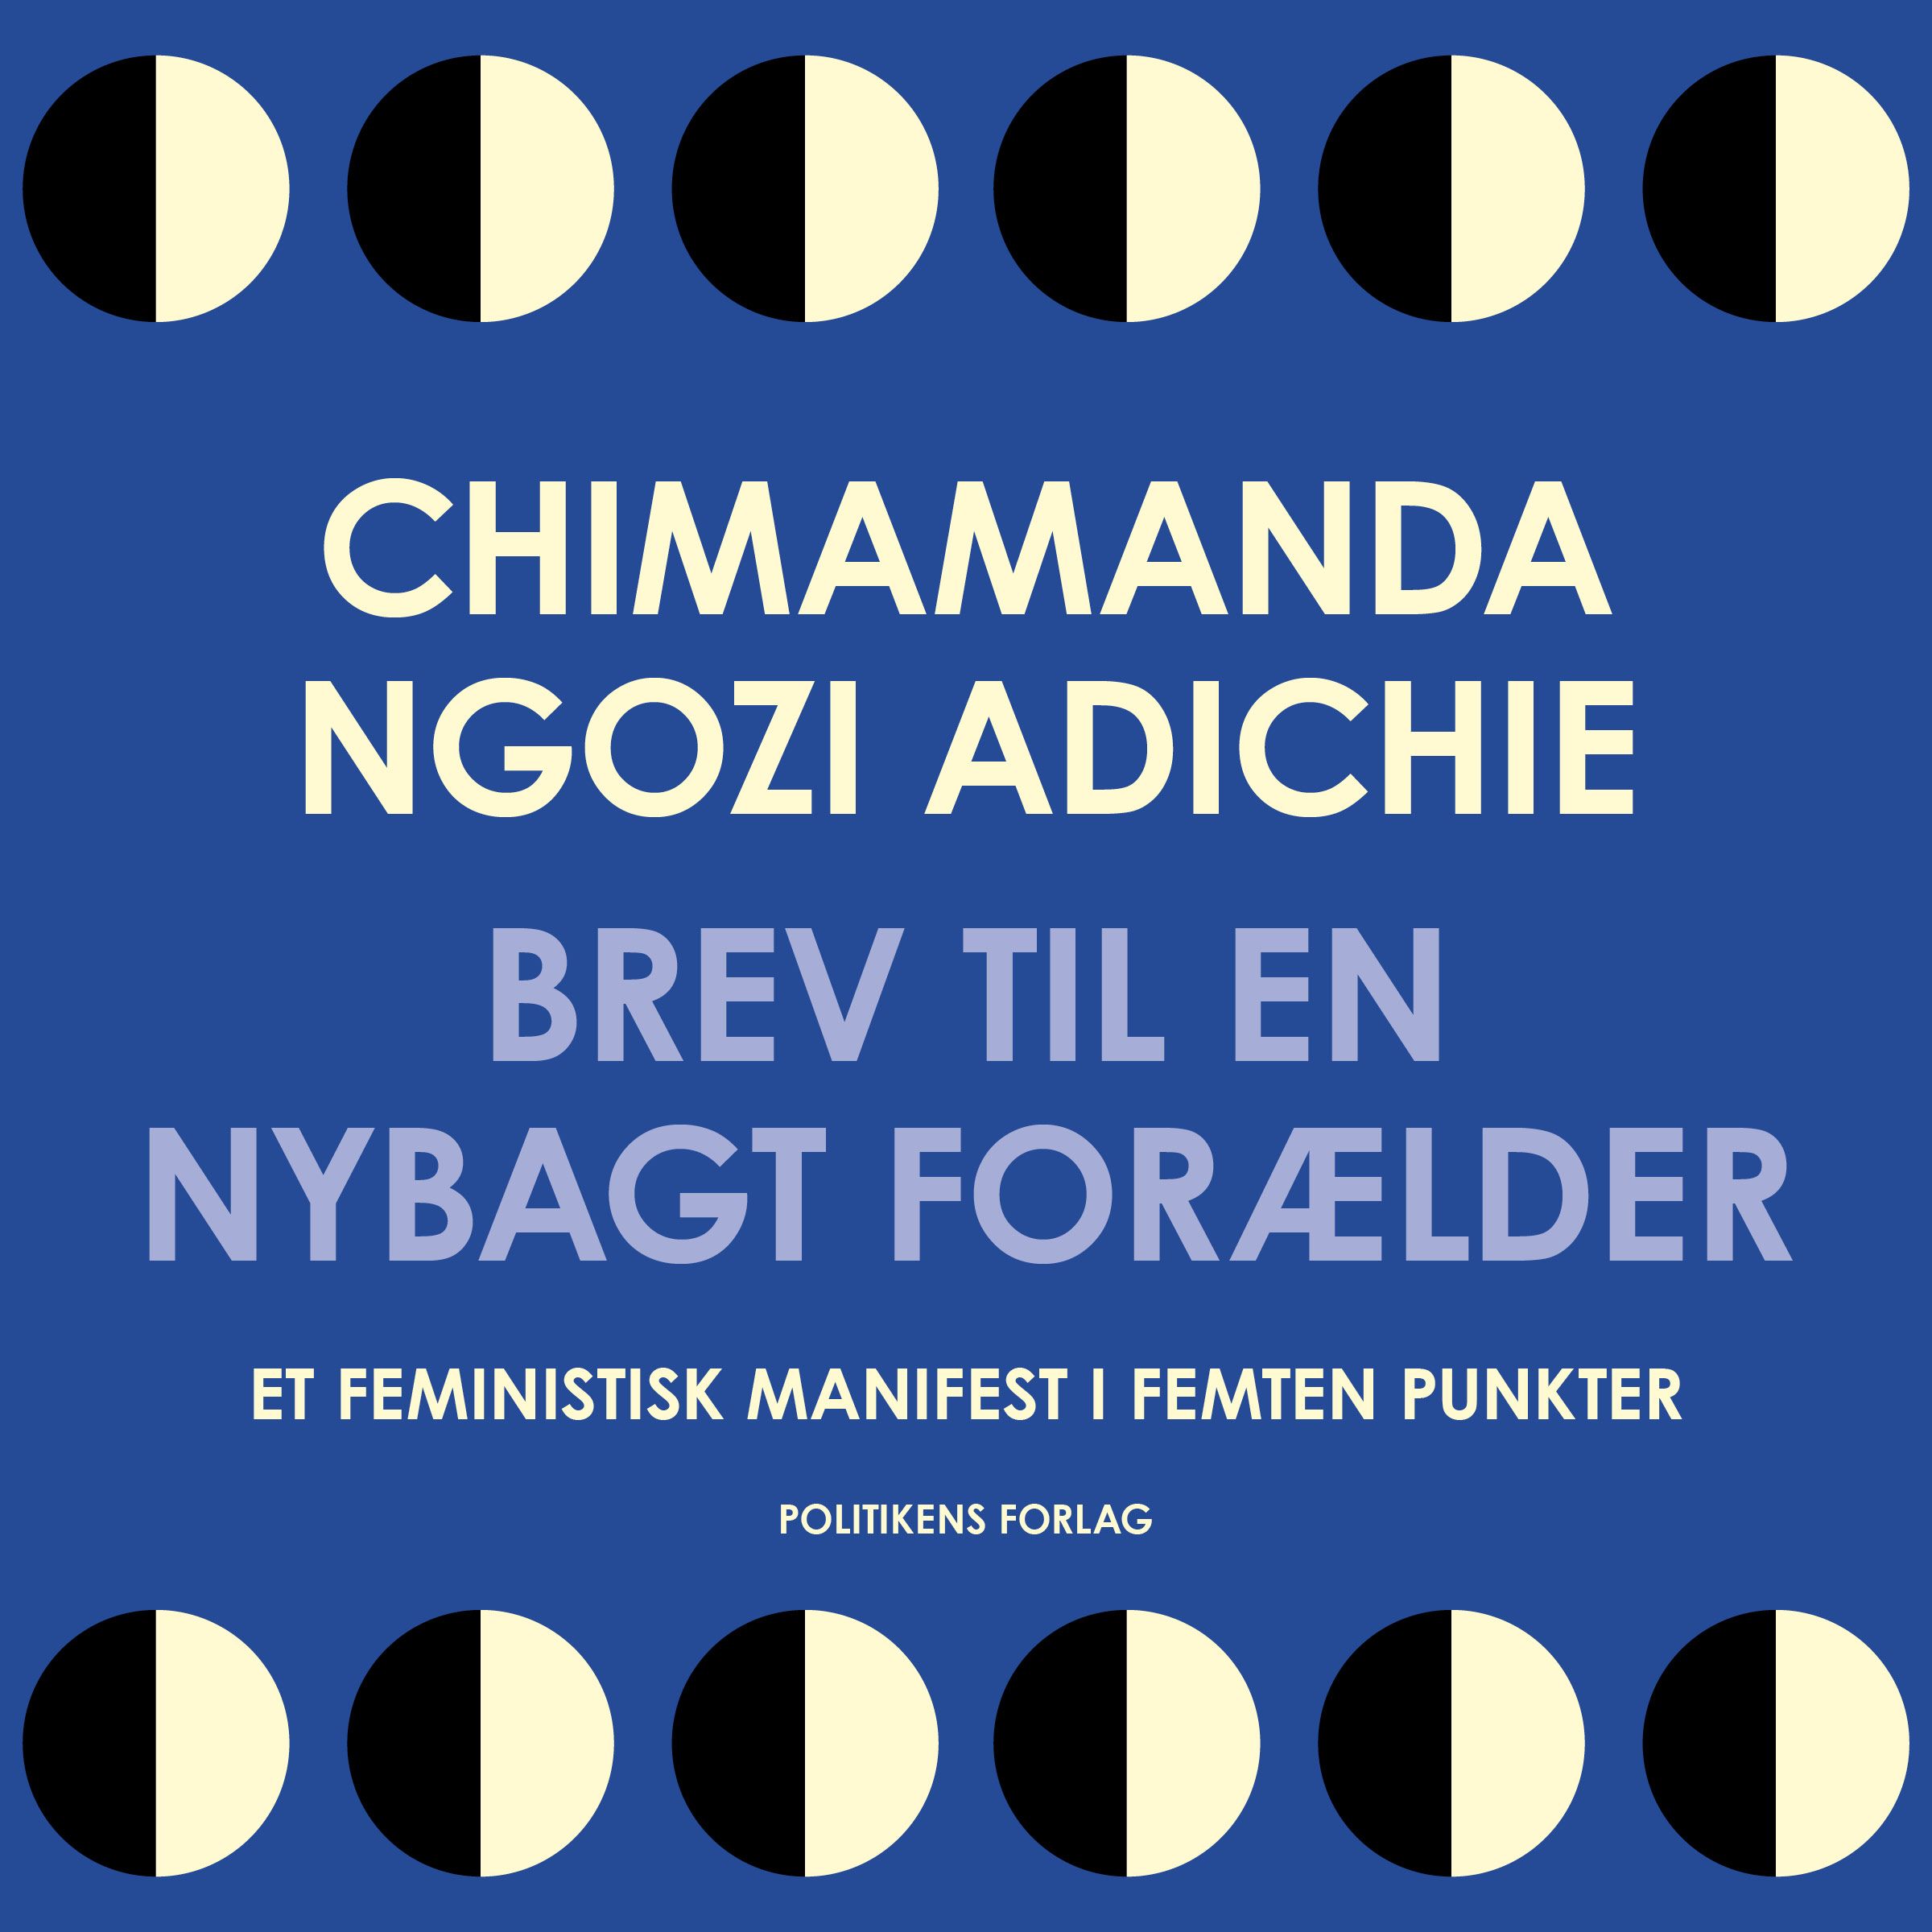 Brev til en nybagt forælder, ljudbok av Chimamanda Ngozi Adichie